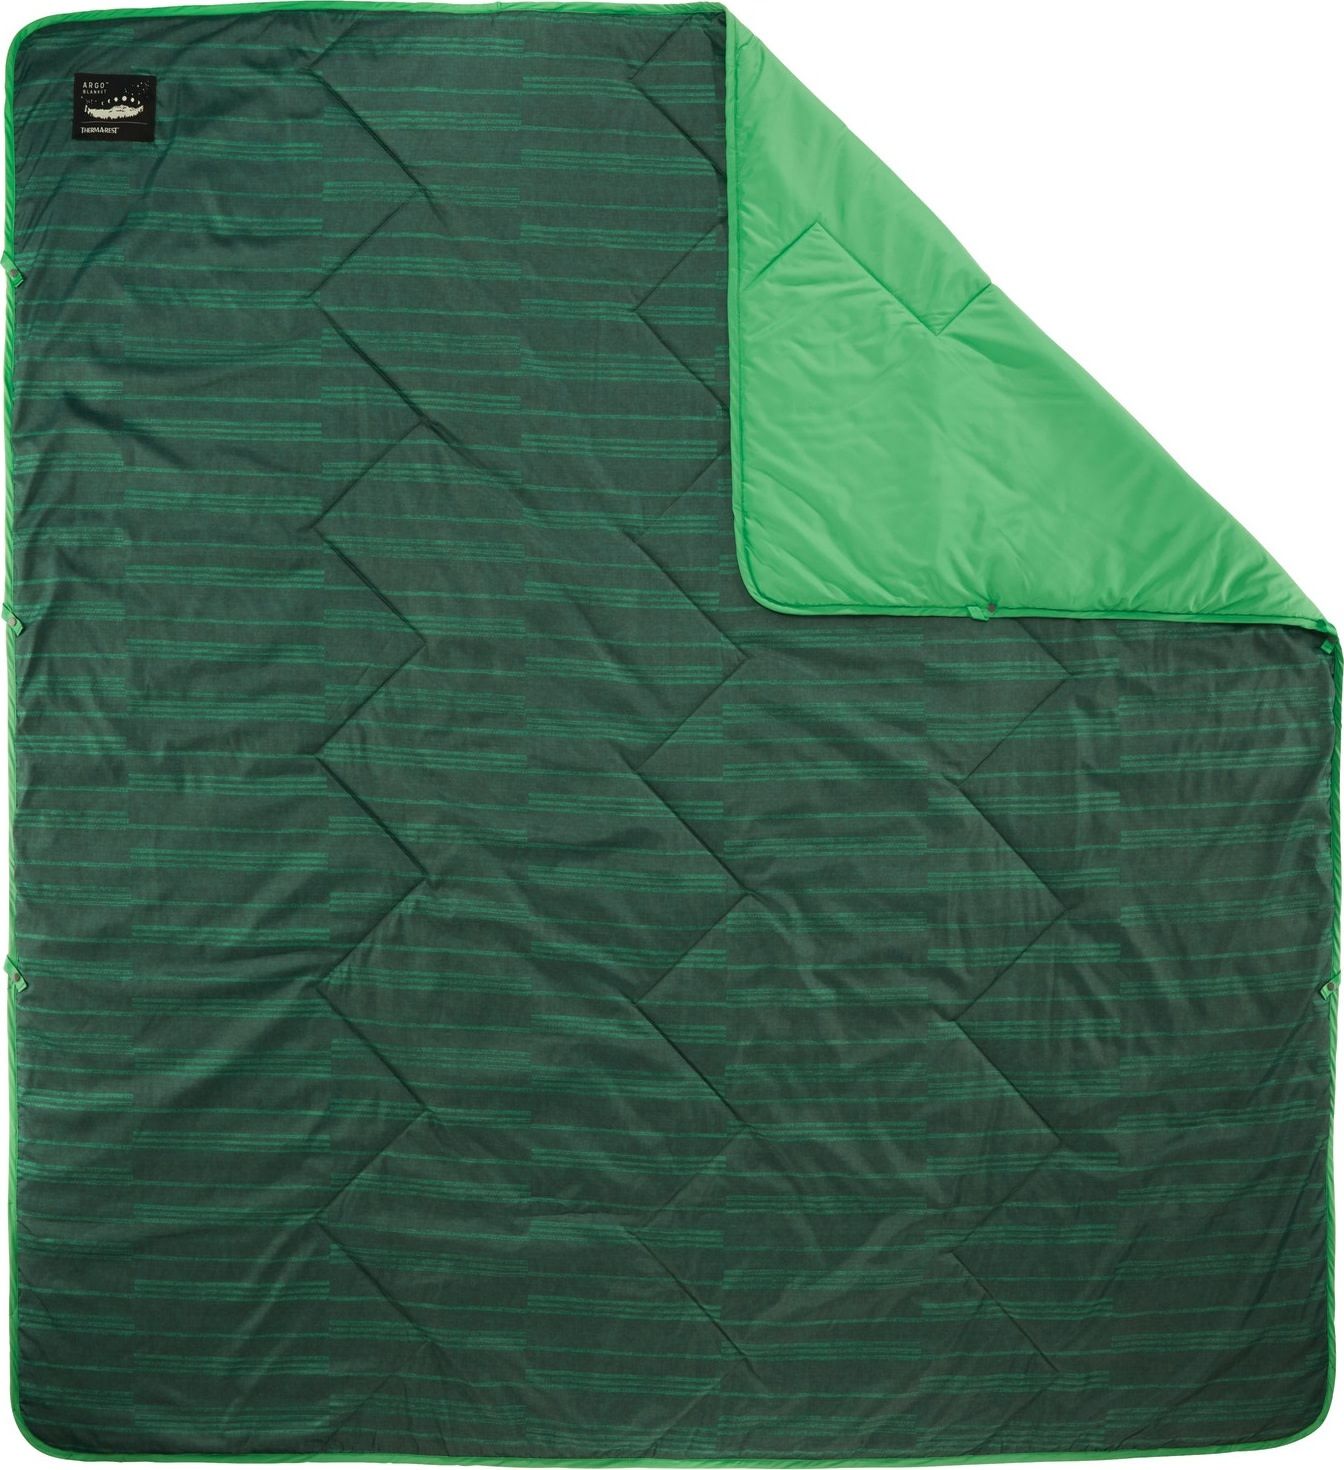 Argo Blanket Green